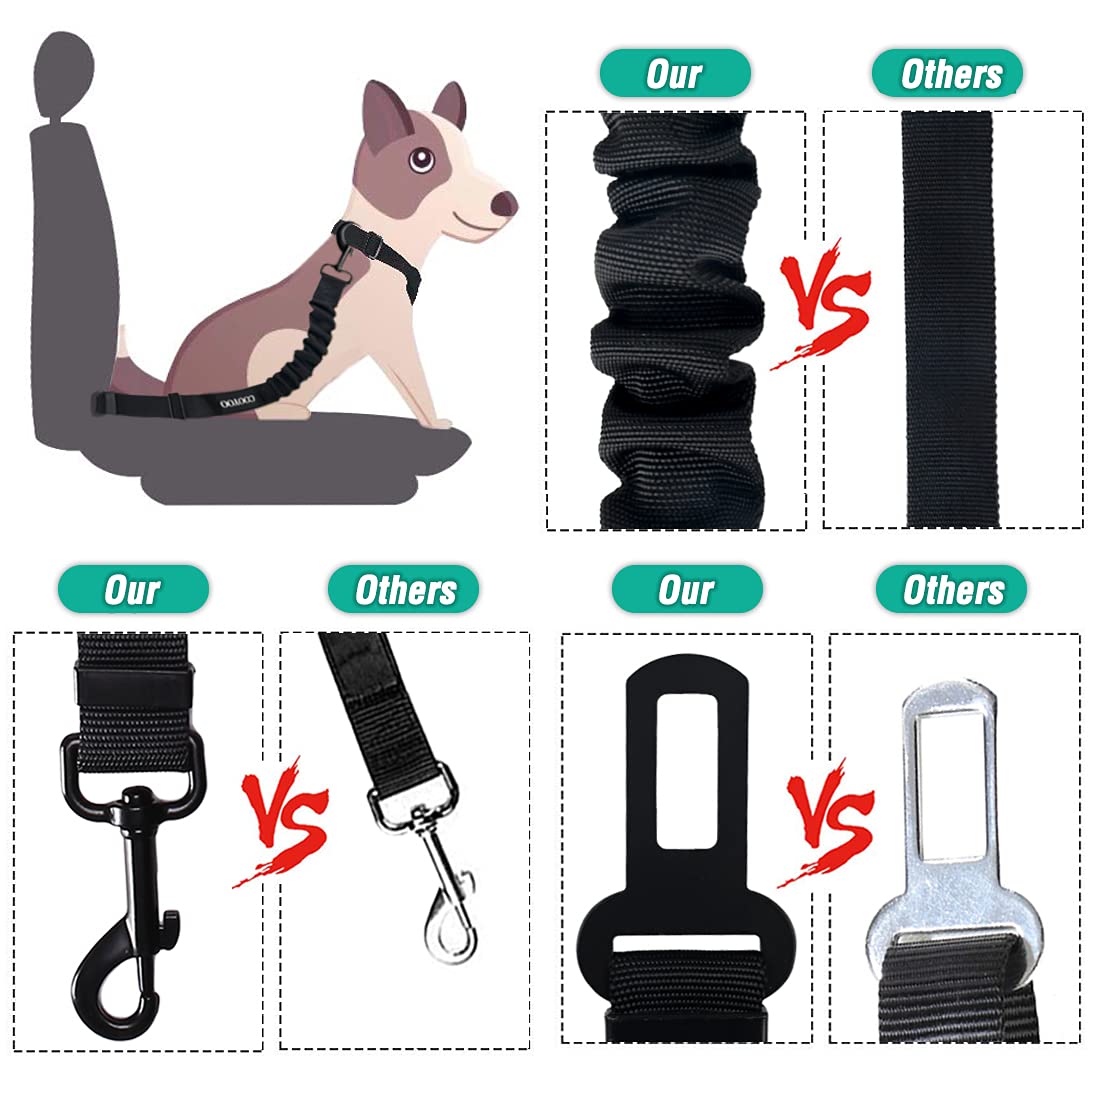 COOYOO Dog Seat Belt,3 Piece Set Retractable Dog Car Harness Adjustable Dog Seat Belt for Vehicle Nylon Pet Safety Seat Belts Heavy Duty & Elastic